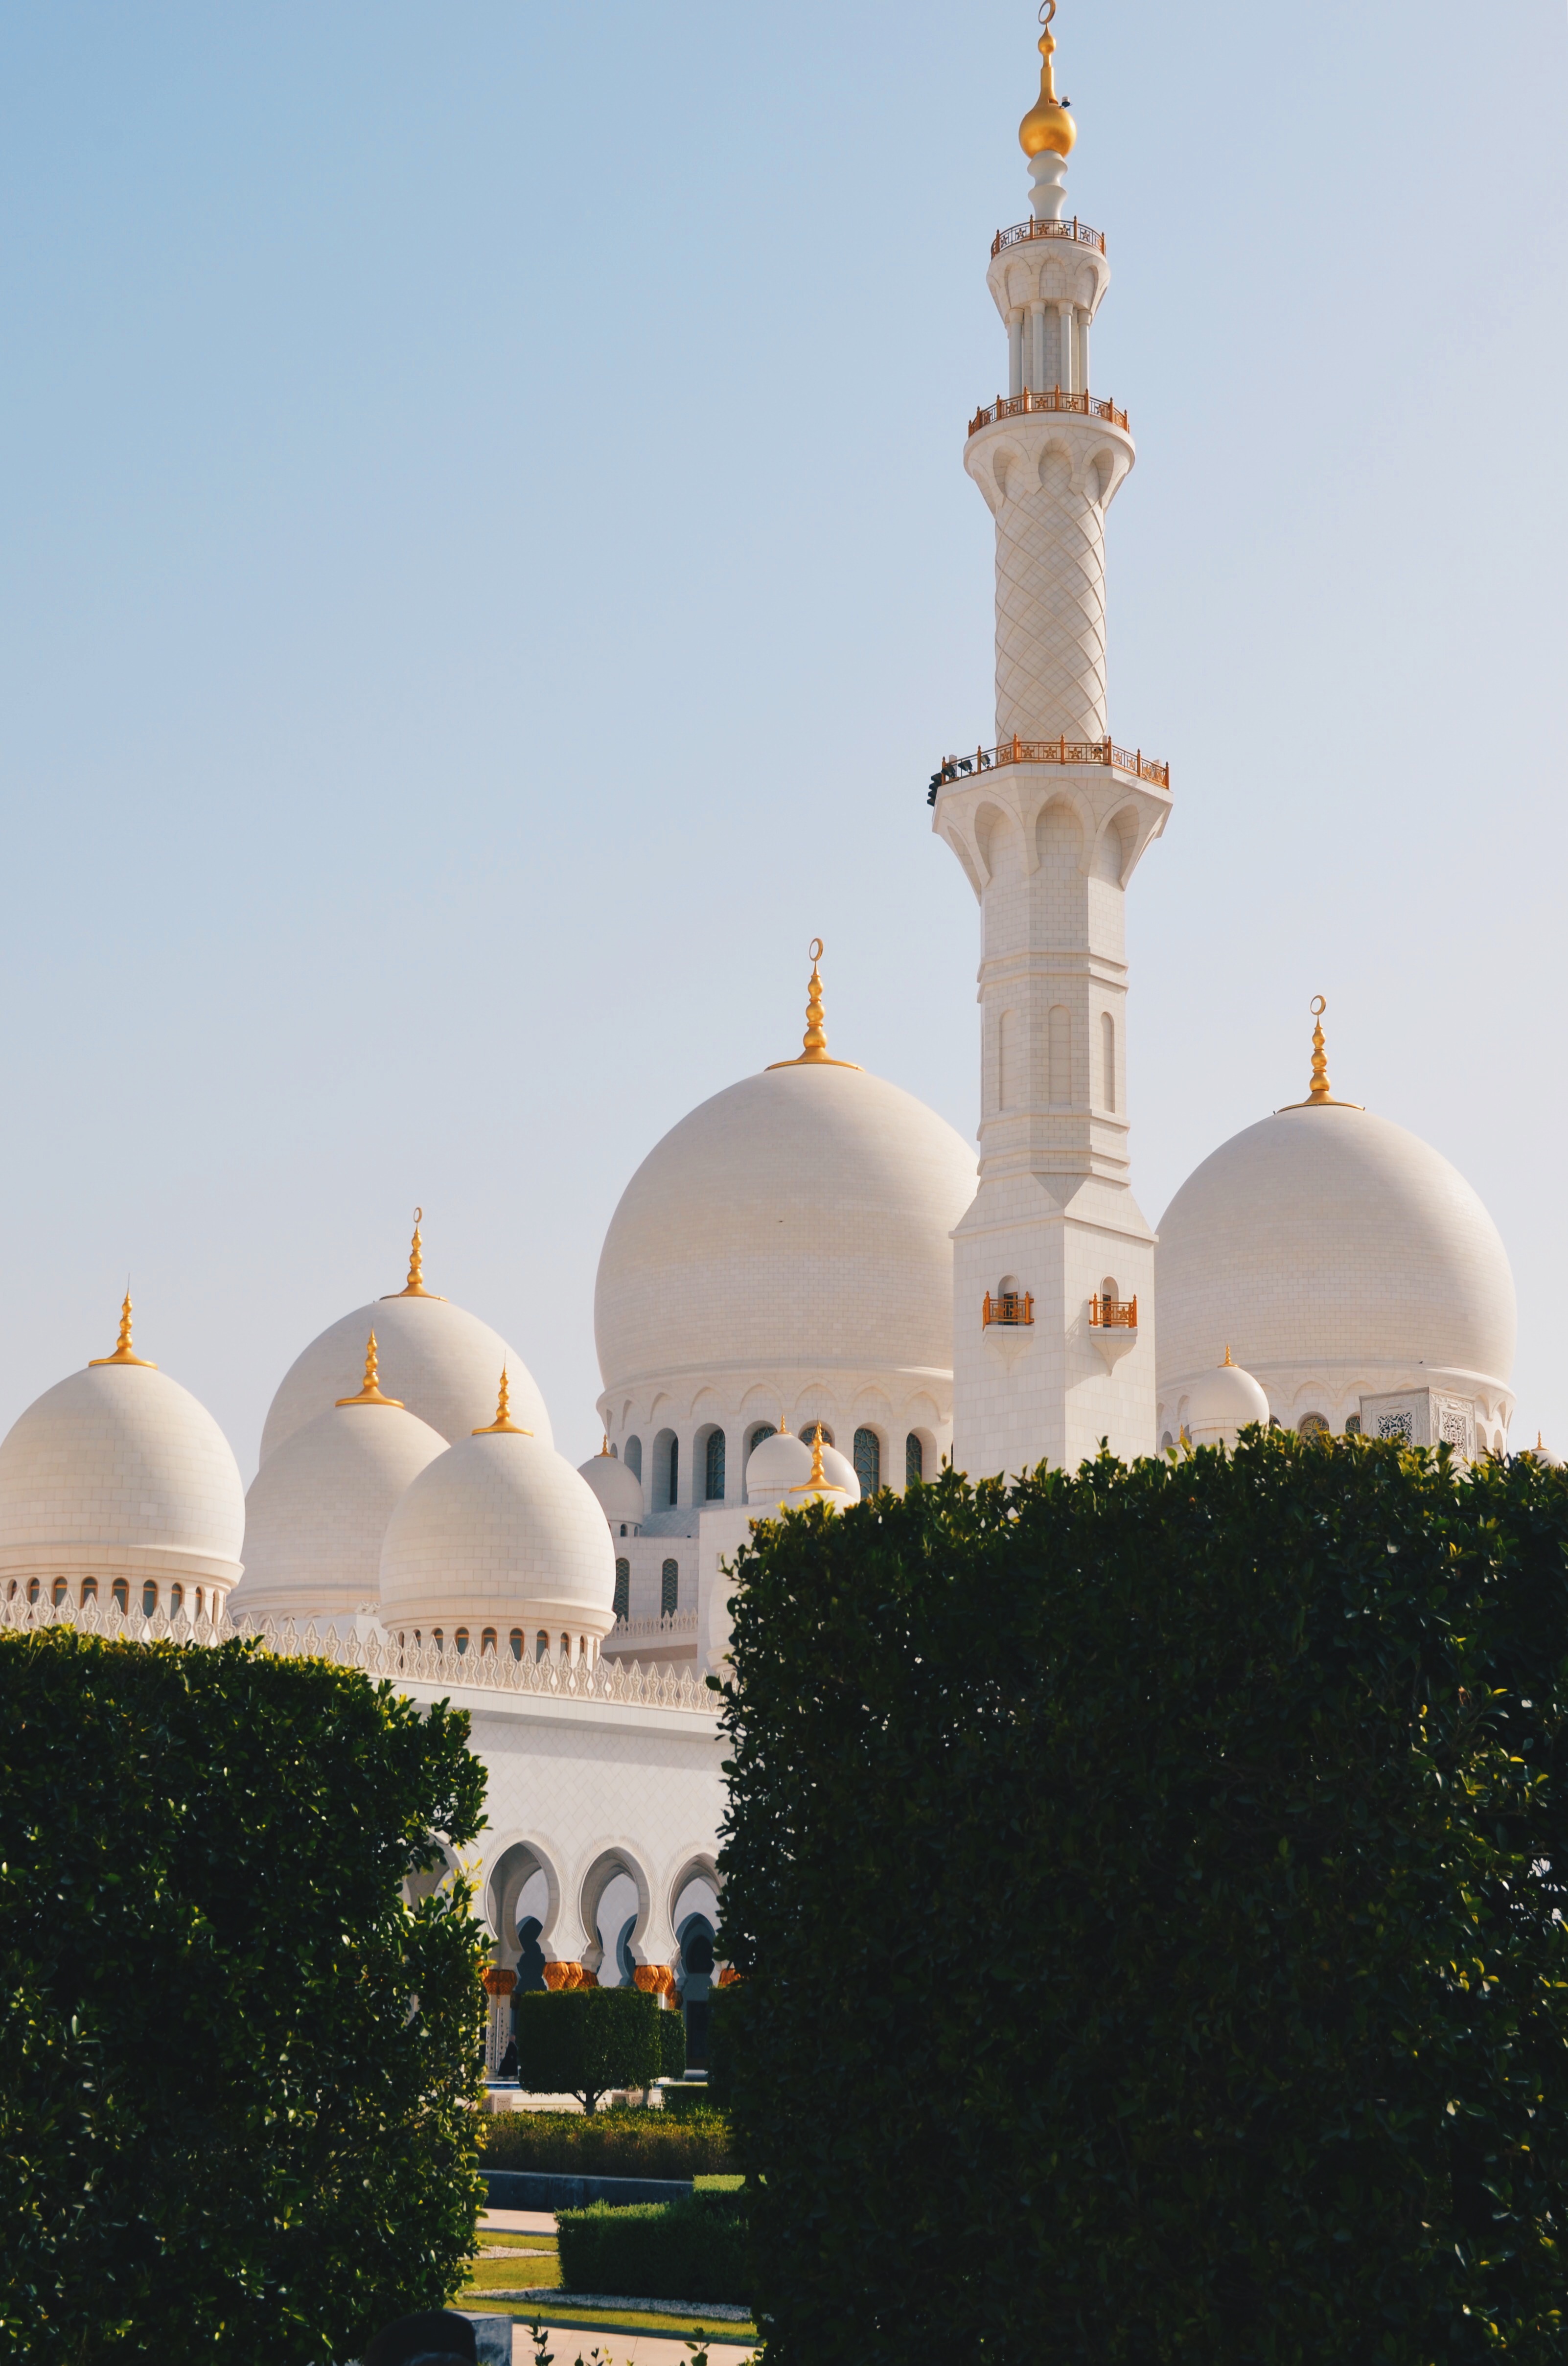 Best Mosque Photo · 100% Free Downloads